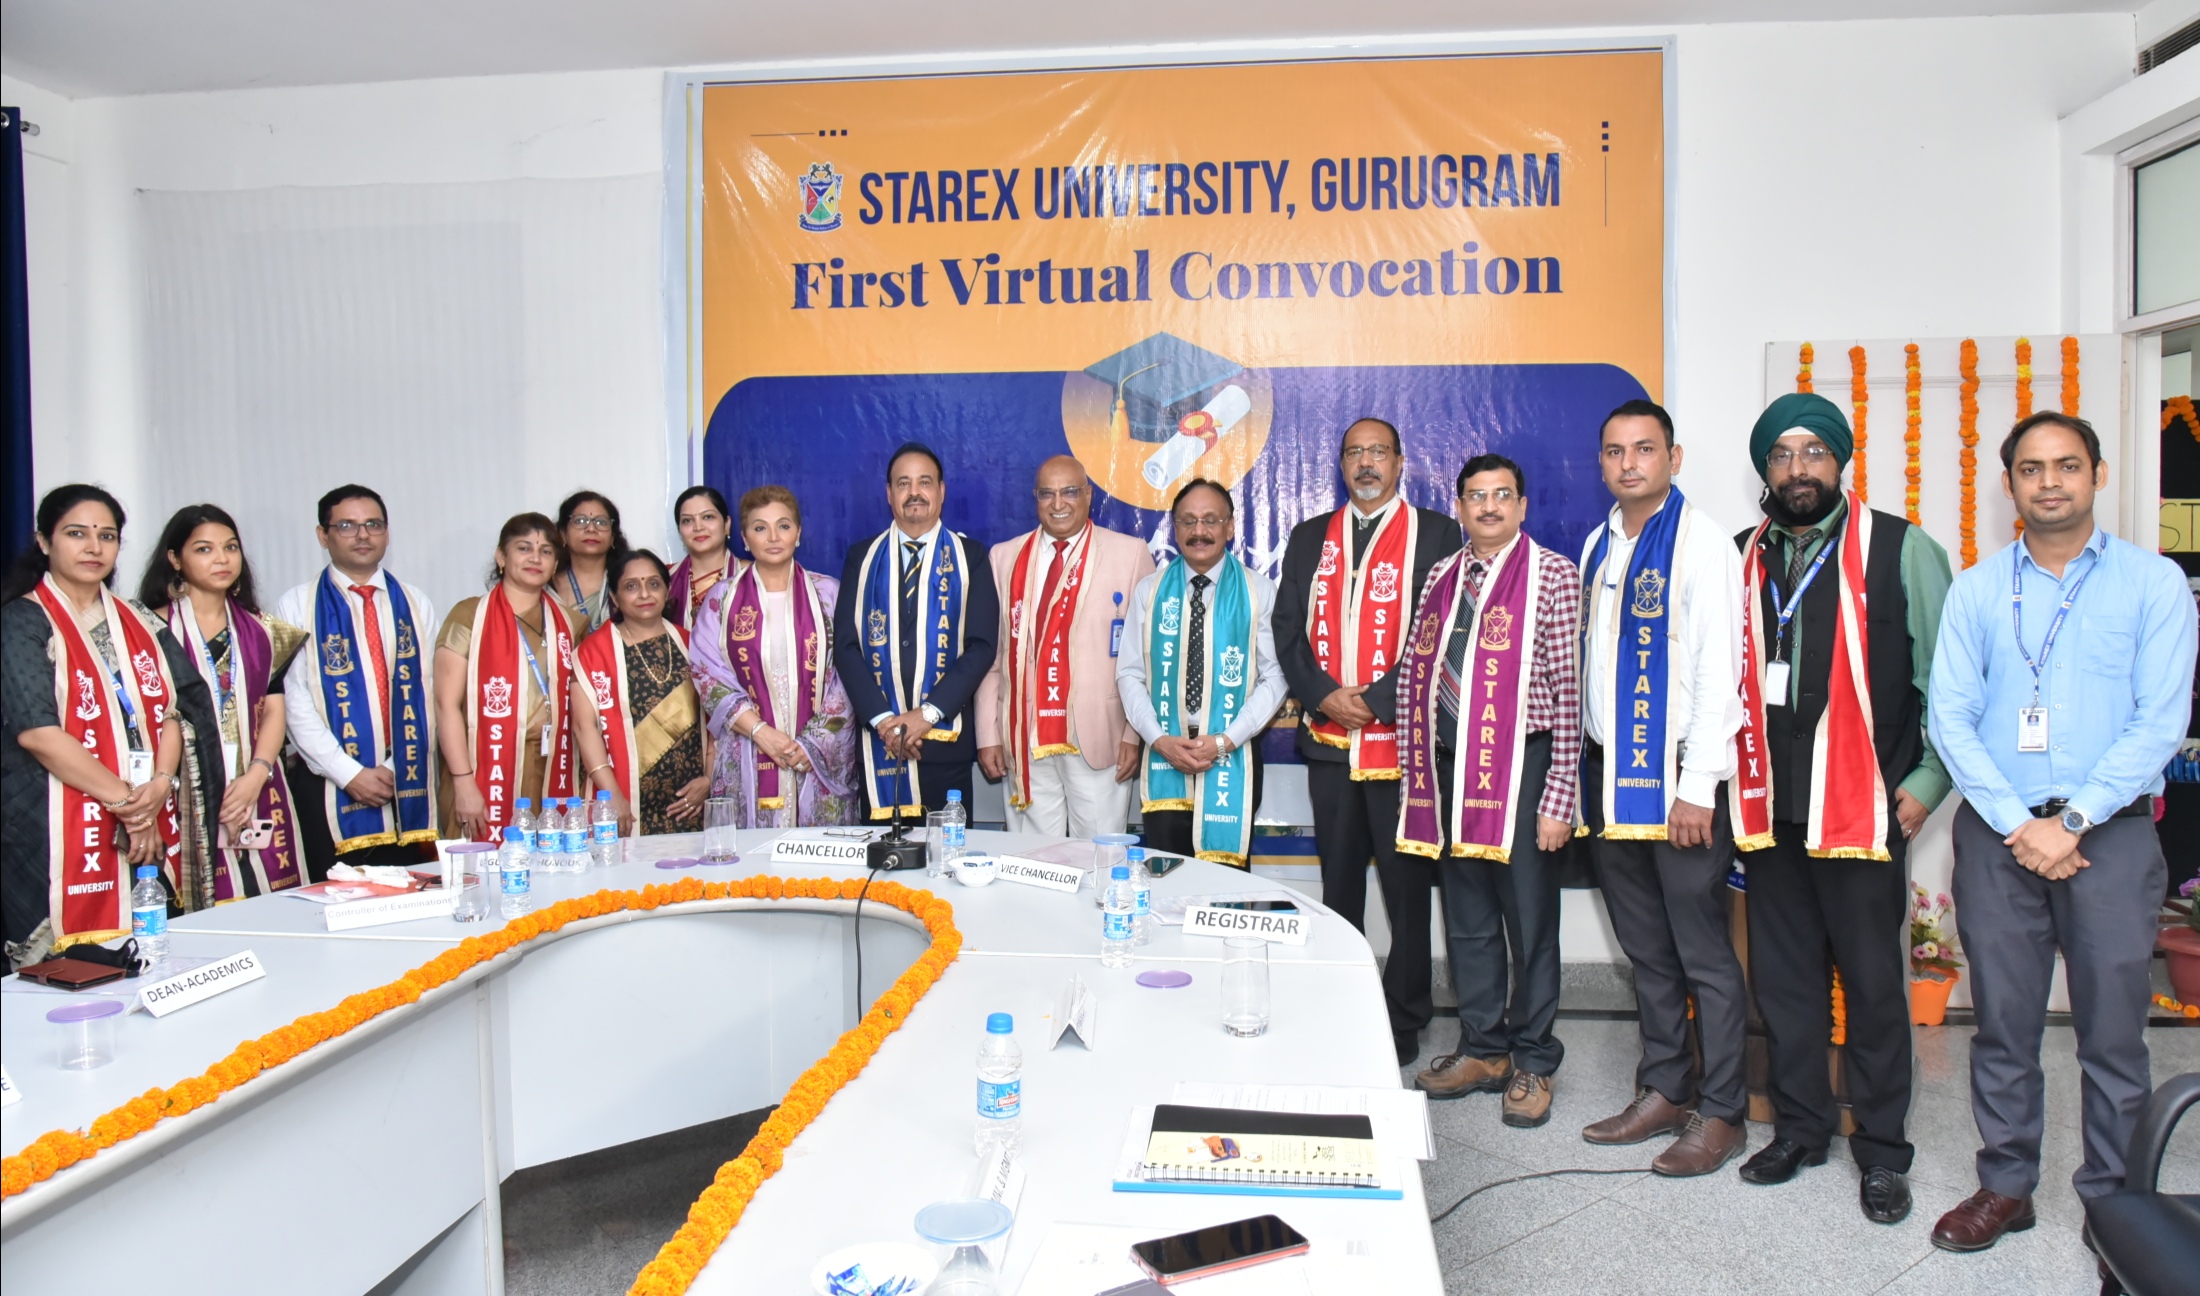 Starex University Gurugram organized First Virtual Convocation